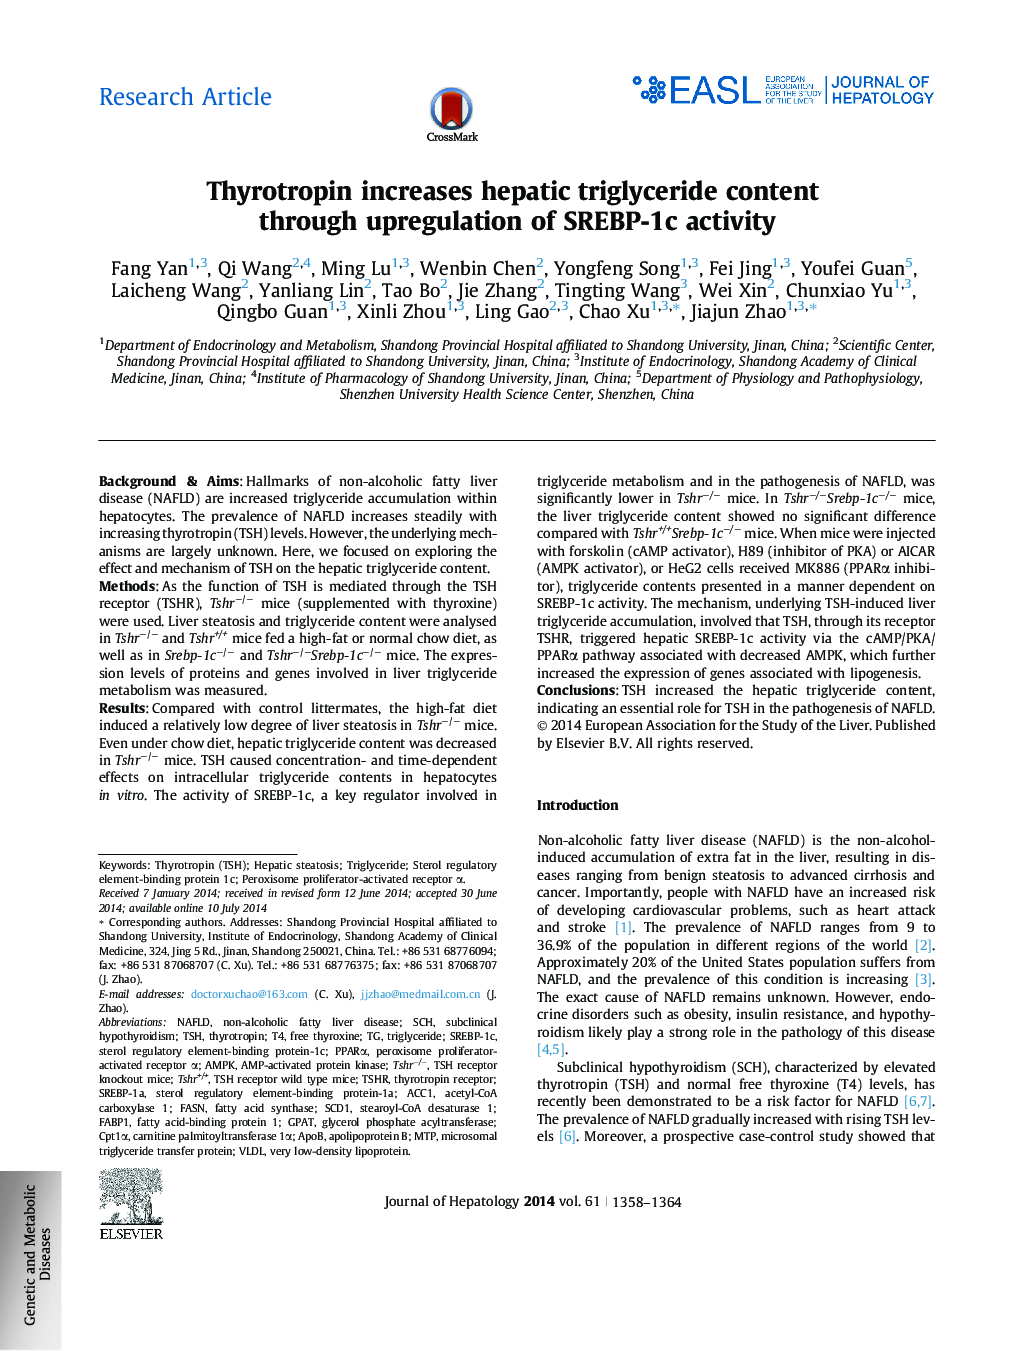 Research ArticleThyrotropin increases hepatic triglyceride content through upregulation of SREBP-1c activity